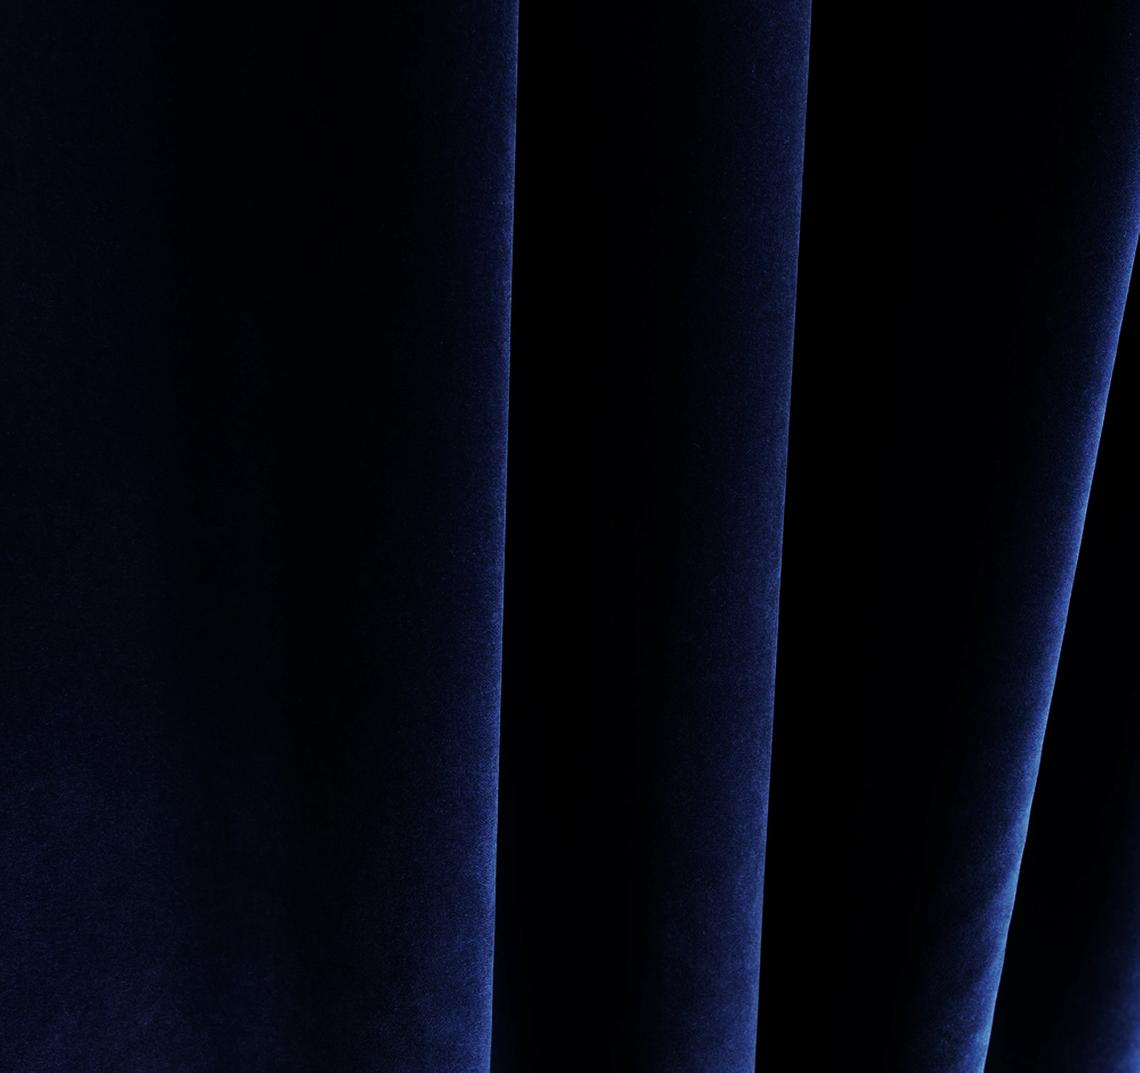 Amore Beaute Velvet Curtain Navy Blue Curtain